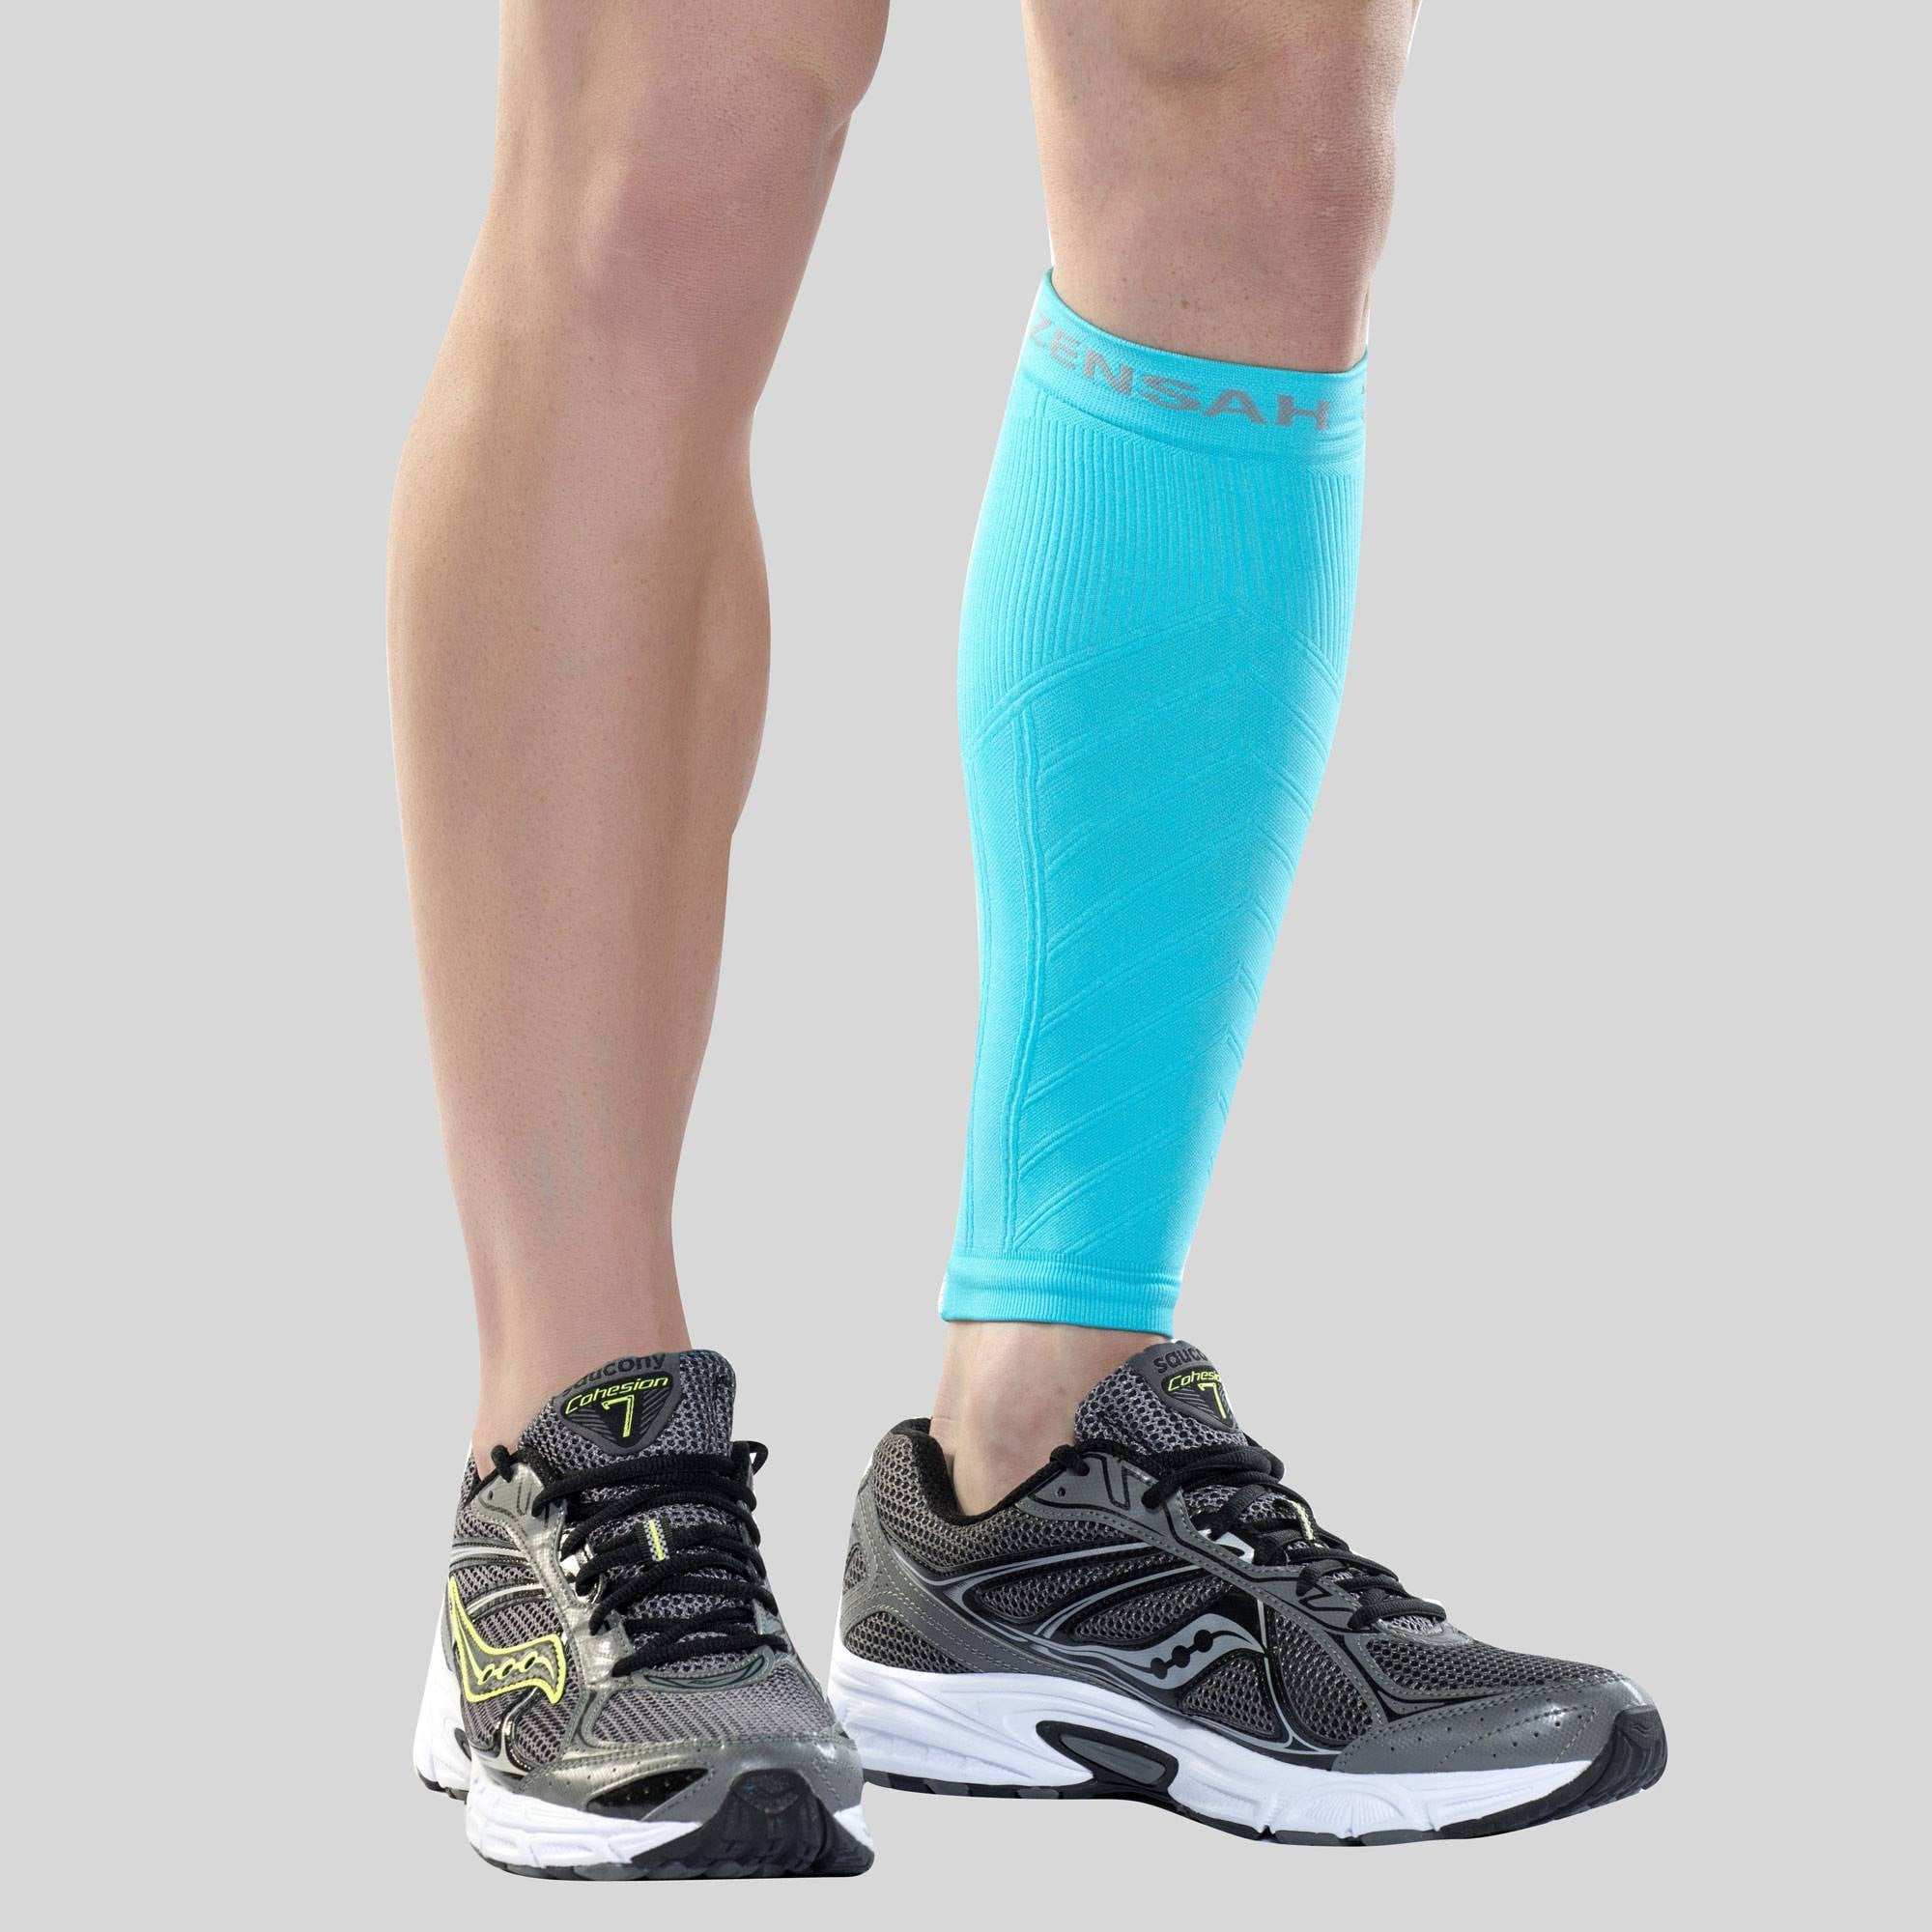 DPTALR Calf Compression Sleeve Leg Compression Socks for Shin